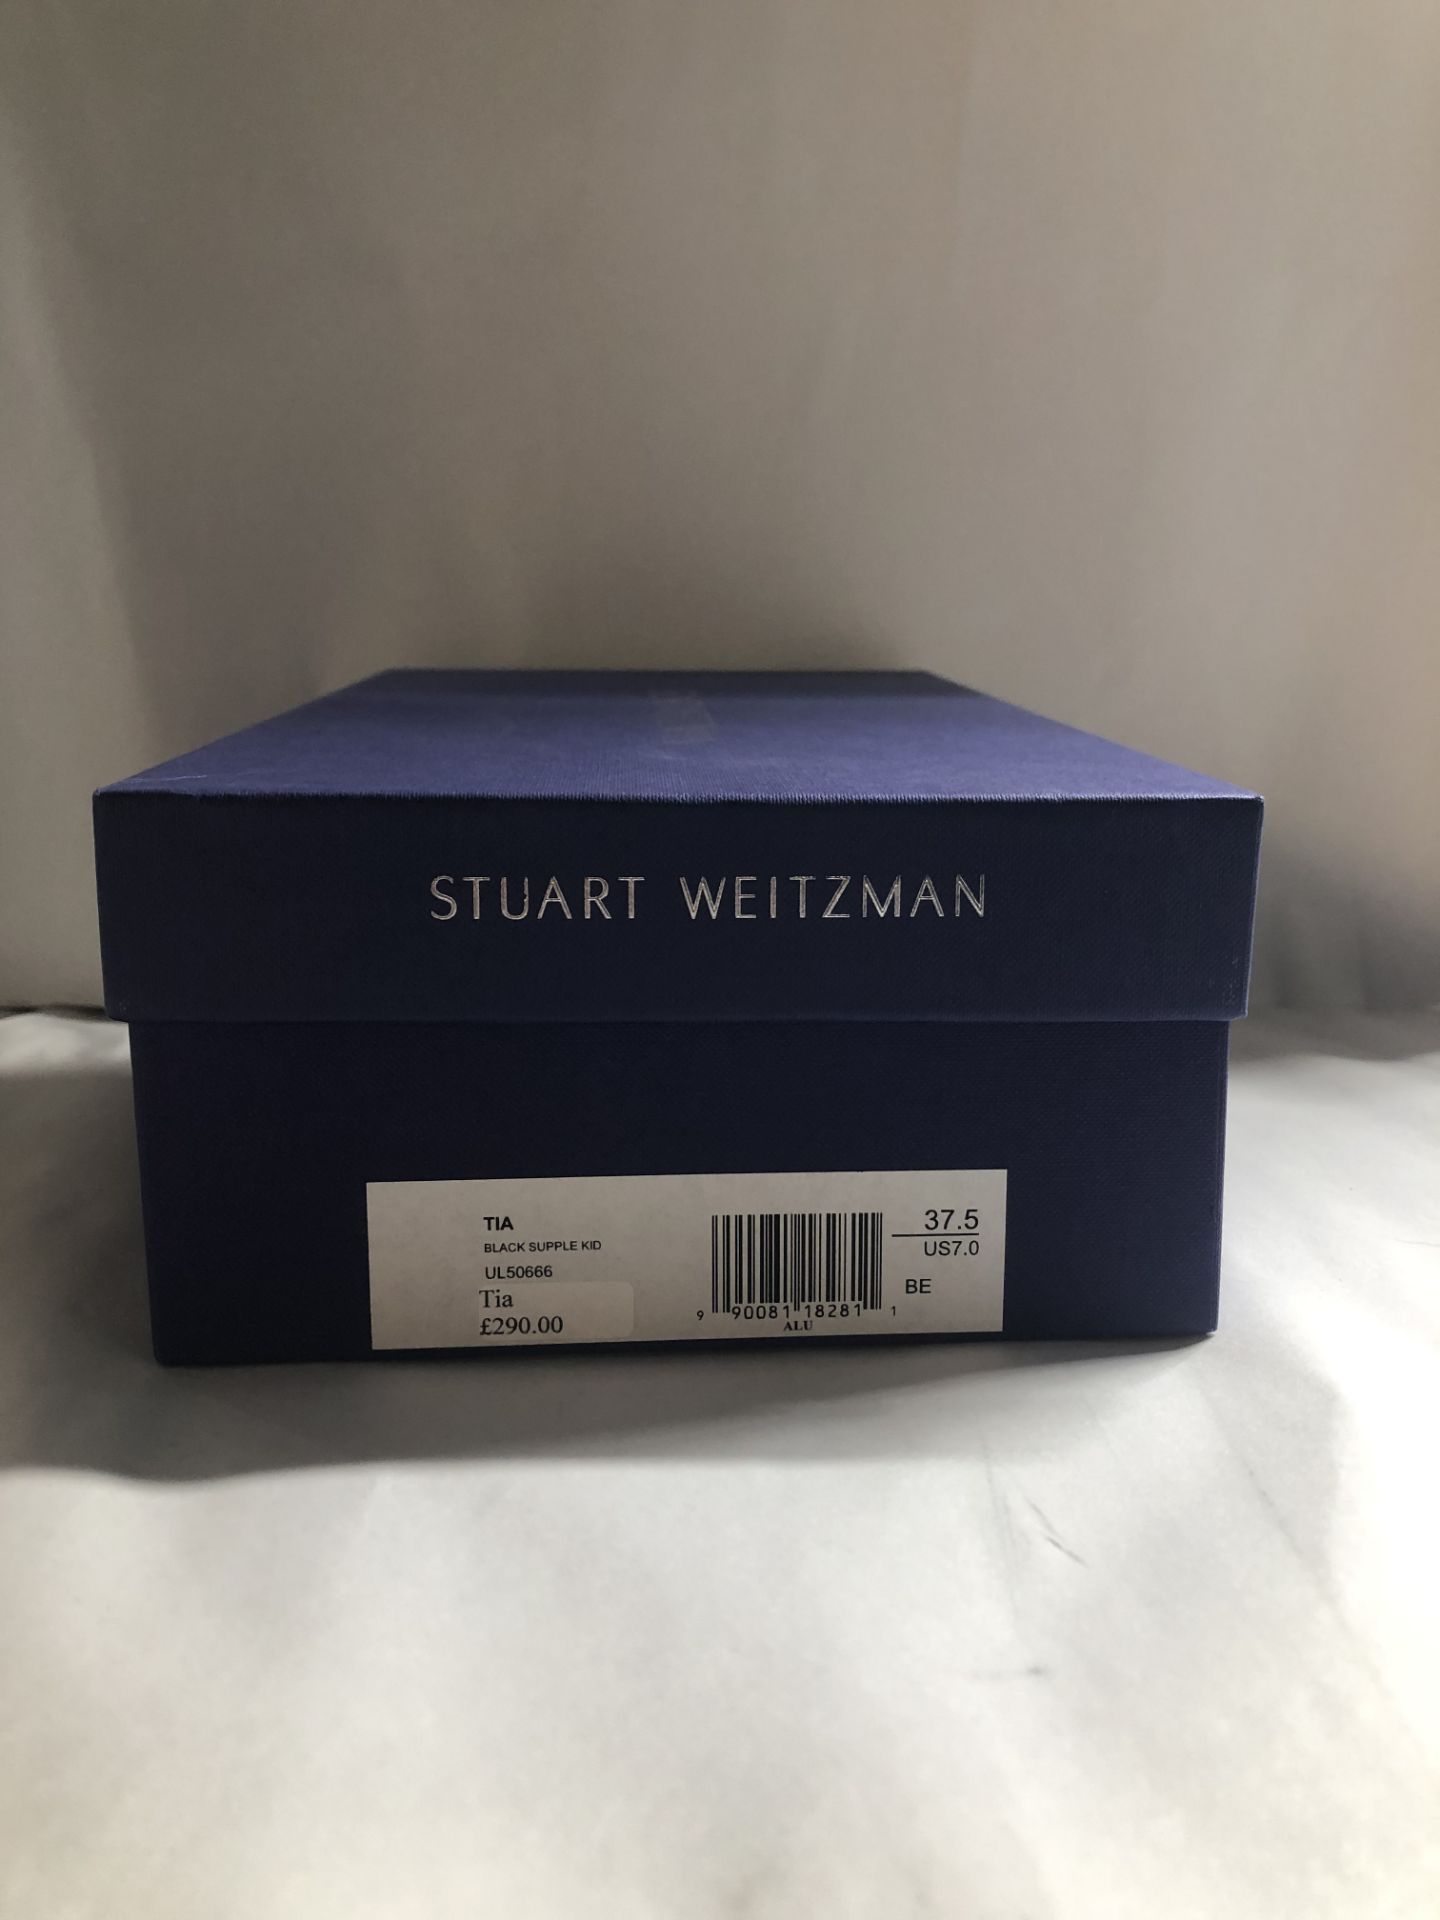 Stuart Weitzman Tia Black Supple Kid Heels.EU 37.5 RRP £290.00 - Image 2 of 2